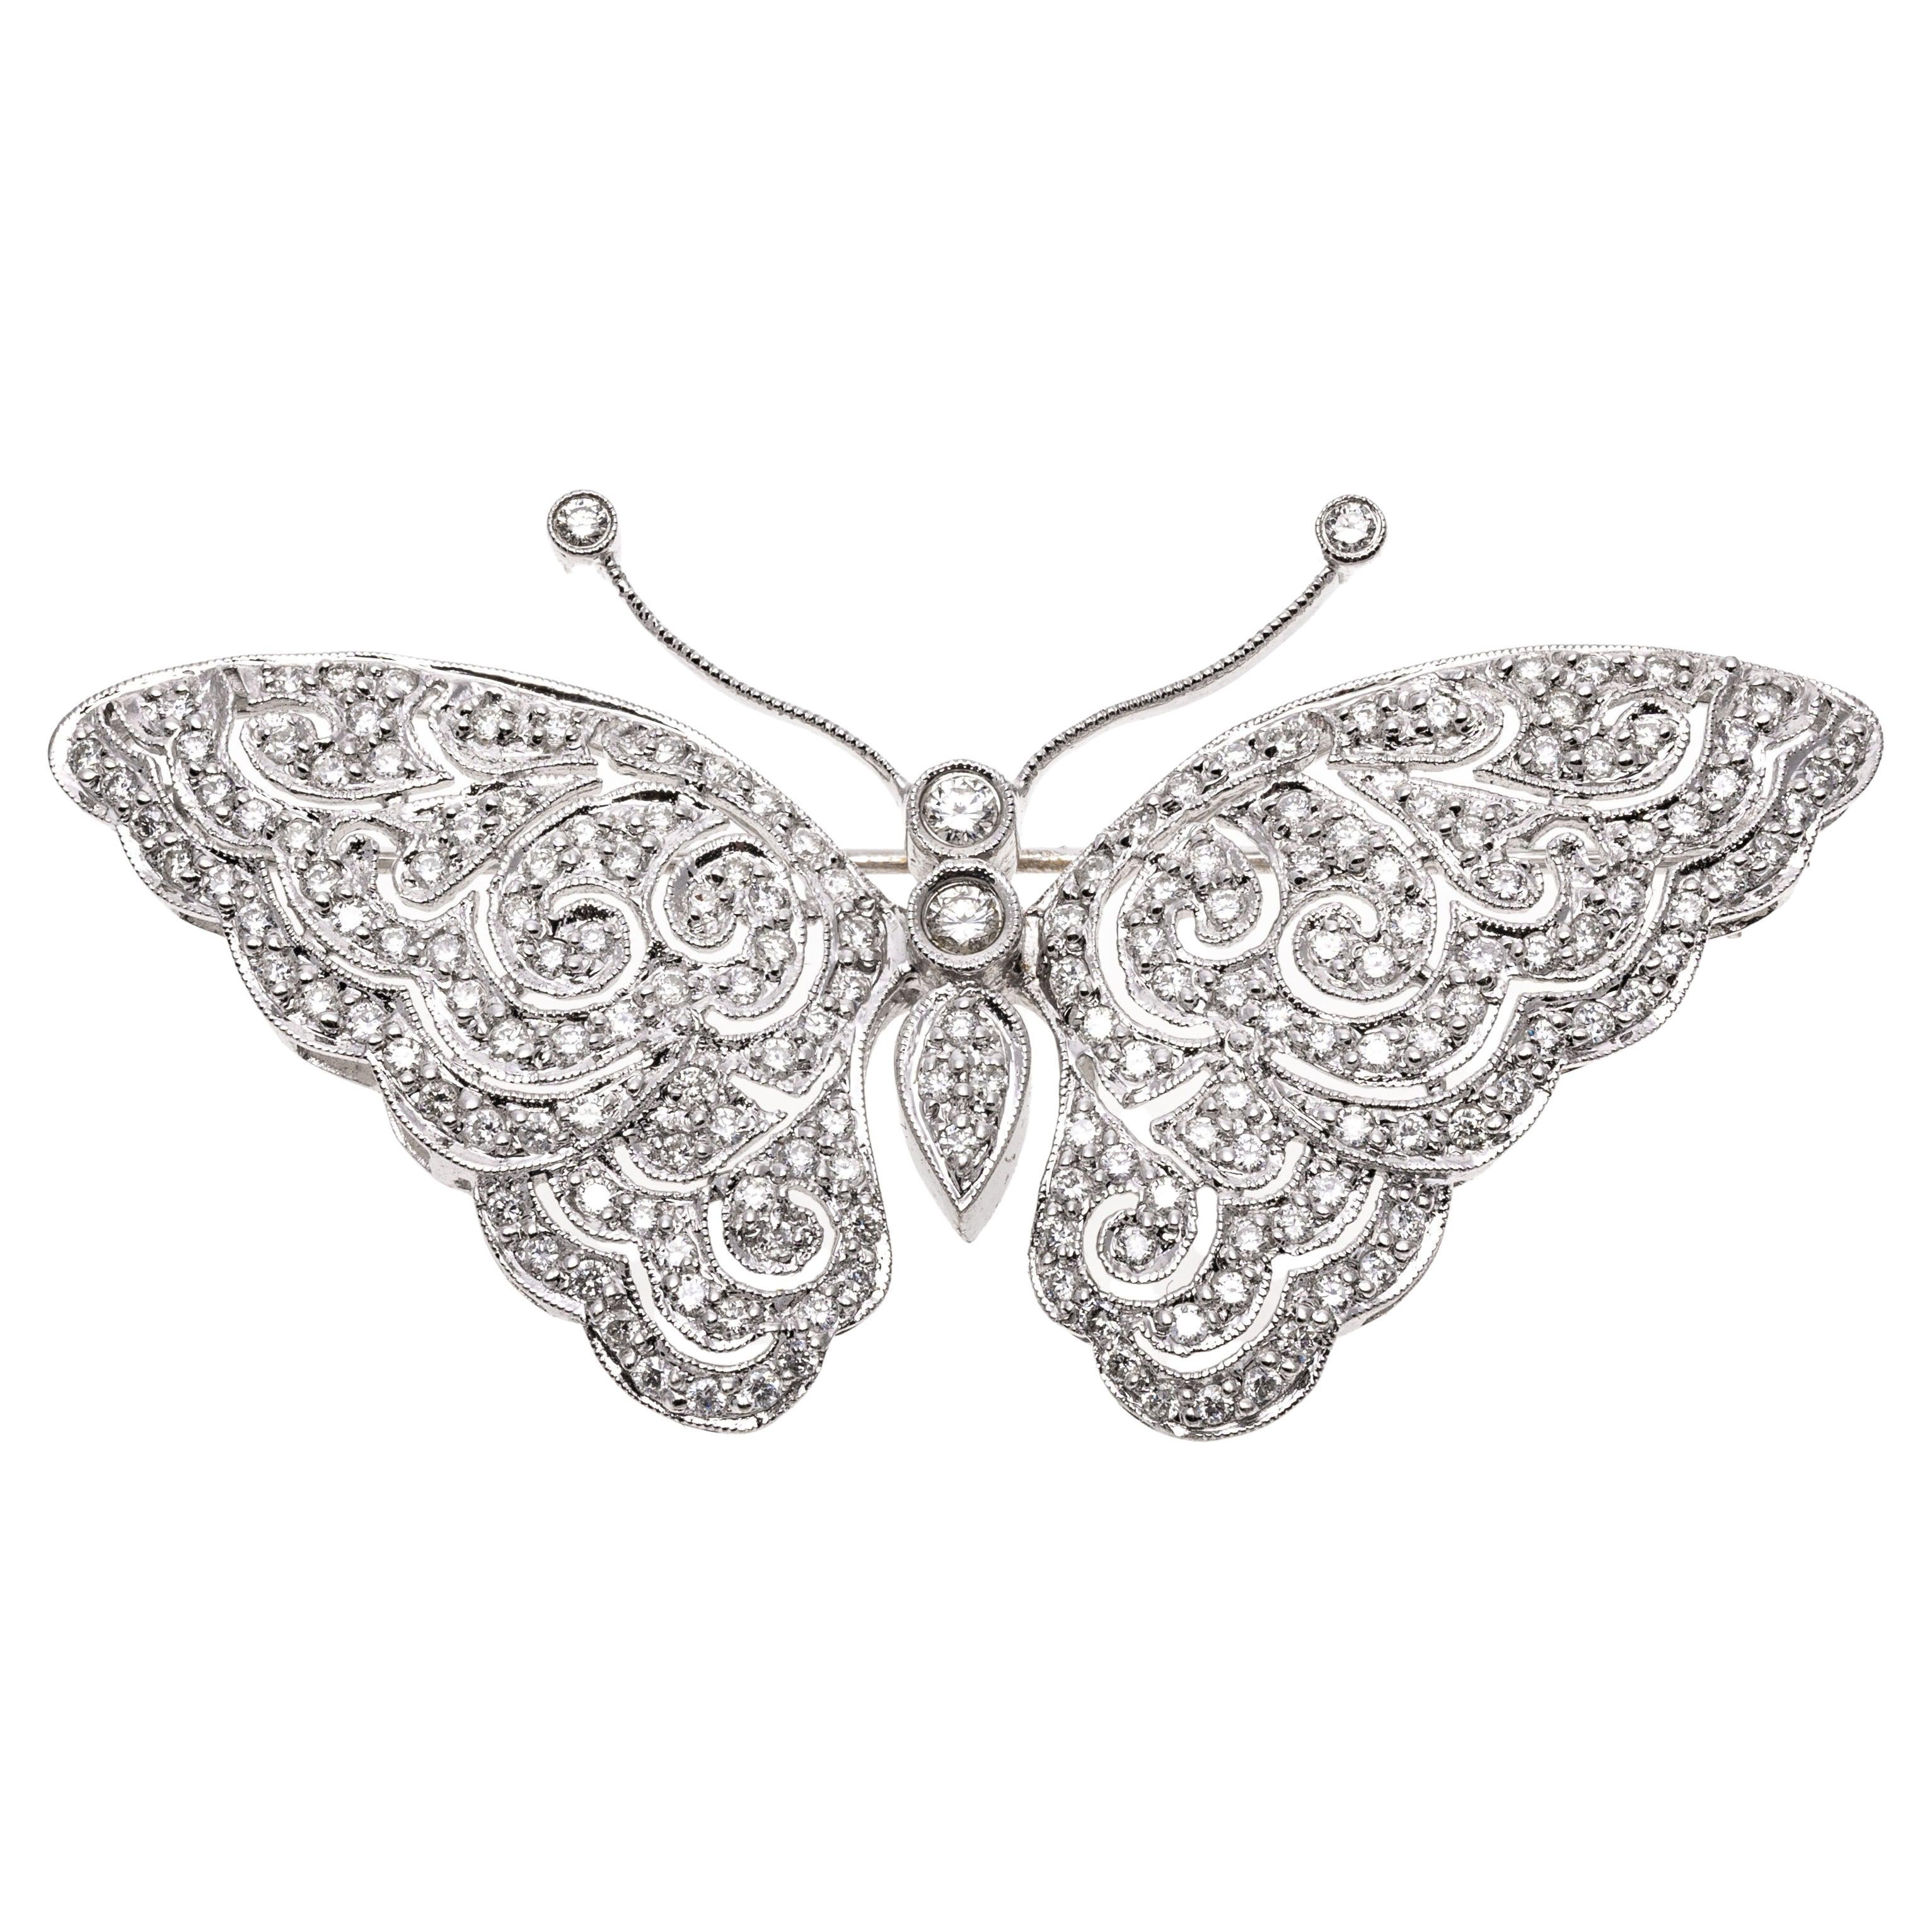 18k White Gold Diamond Set Filigree Butterfly Brooch, Approximately 1.89 TCW